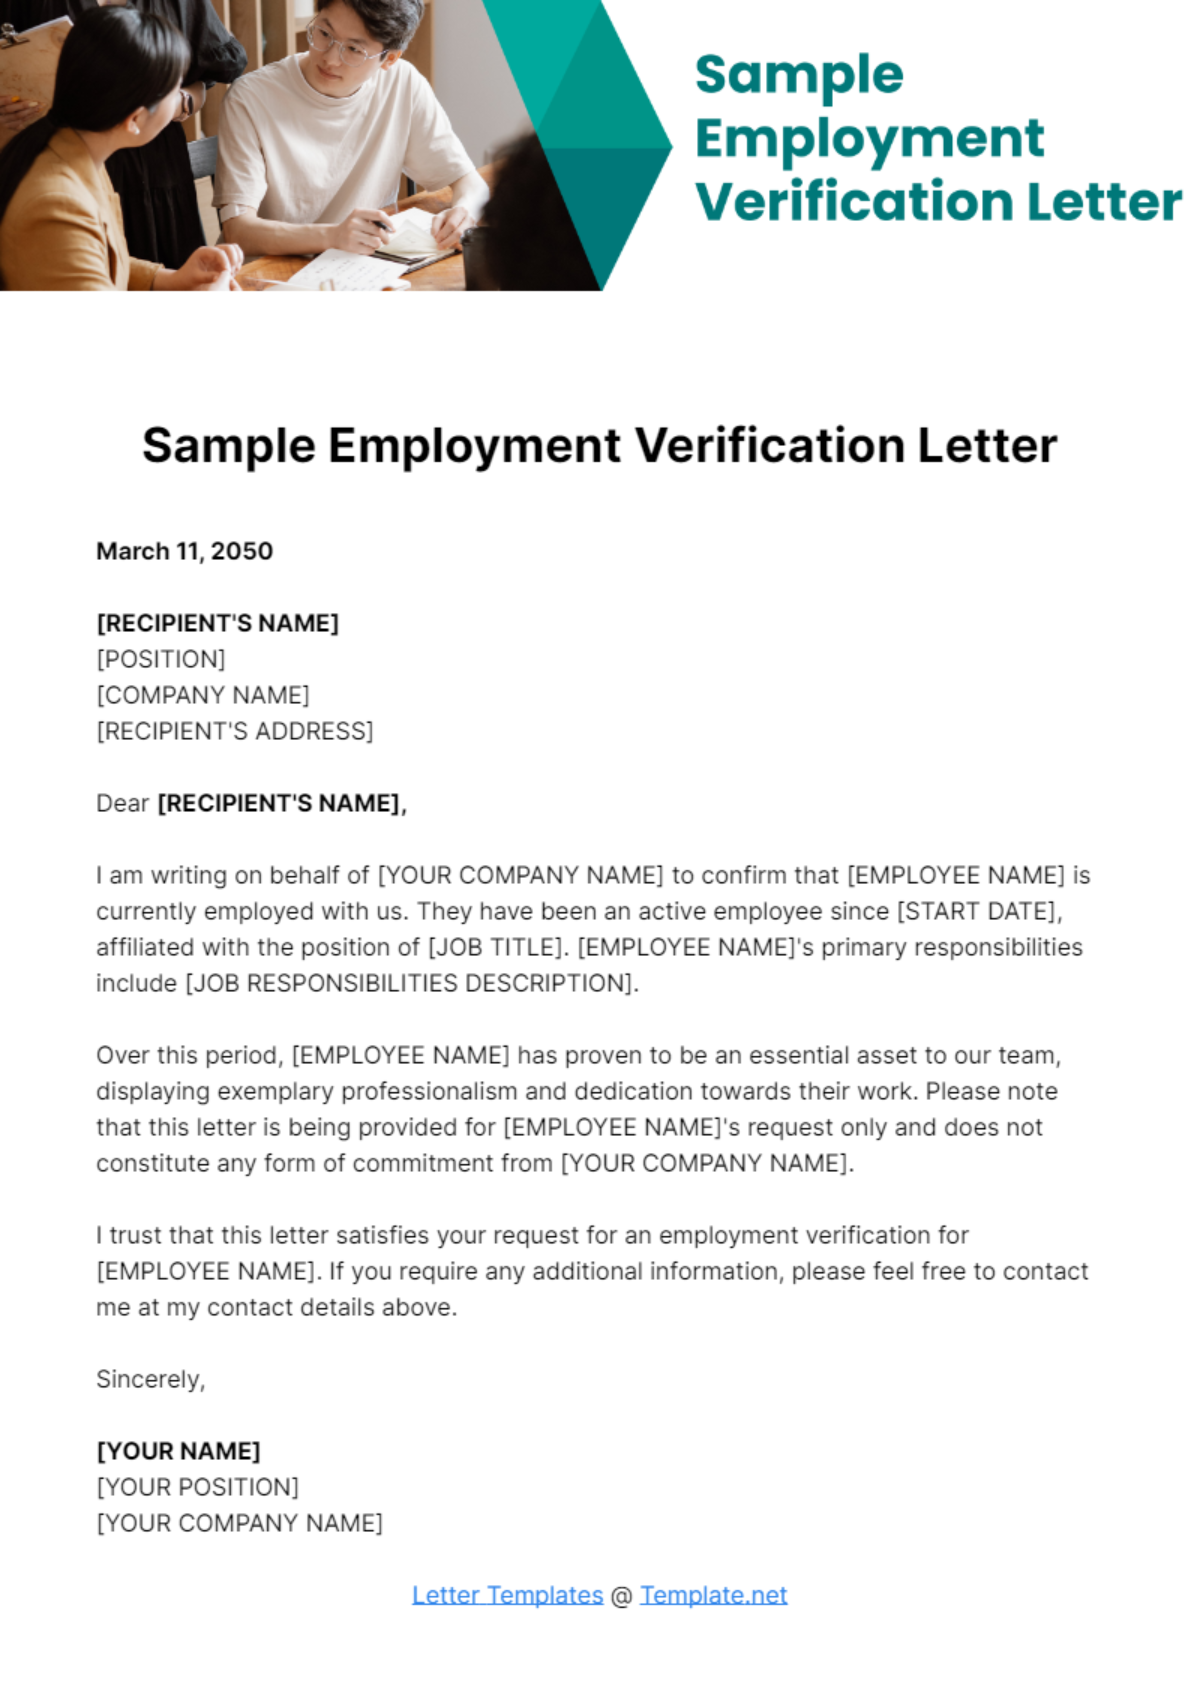 Free Sample Employment Verification Letter Template